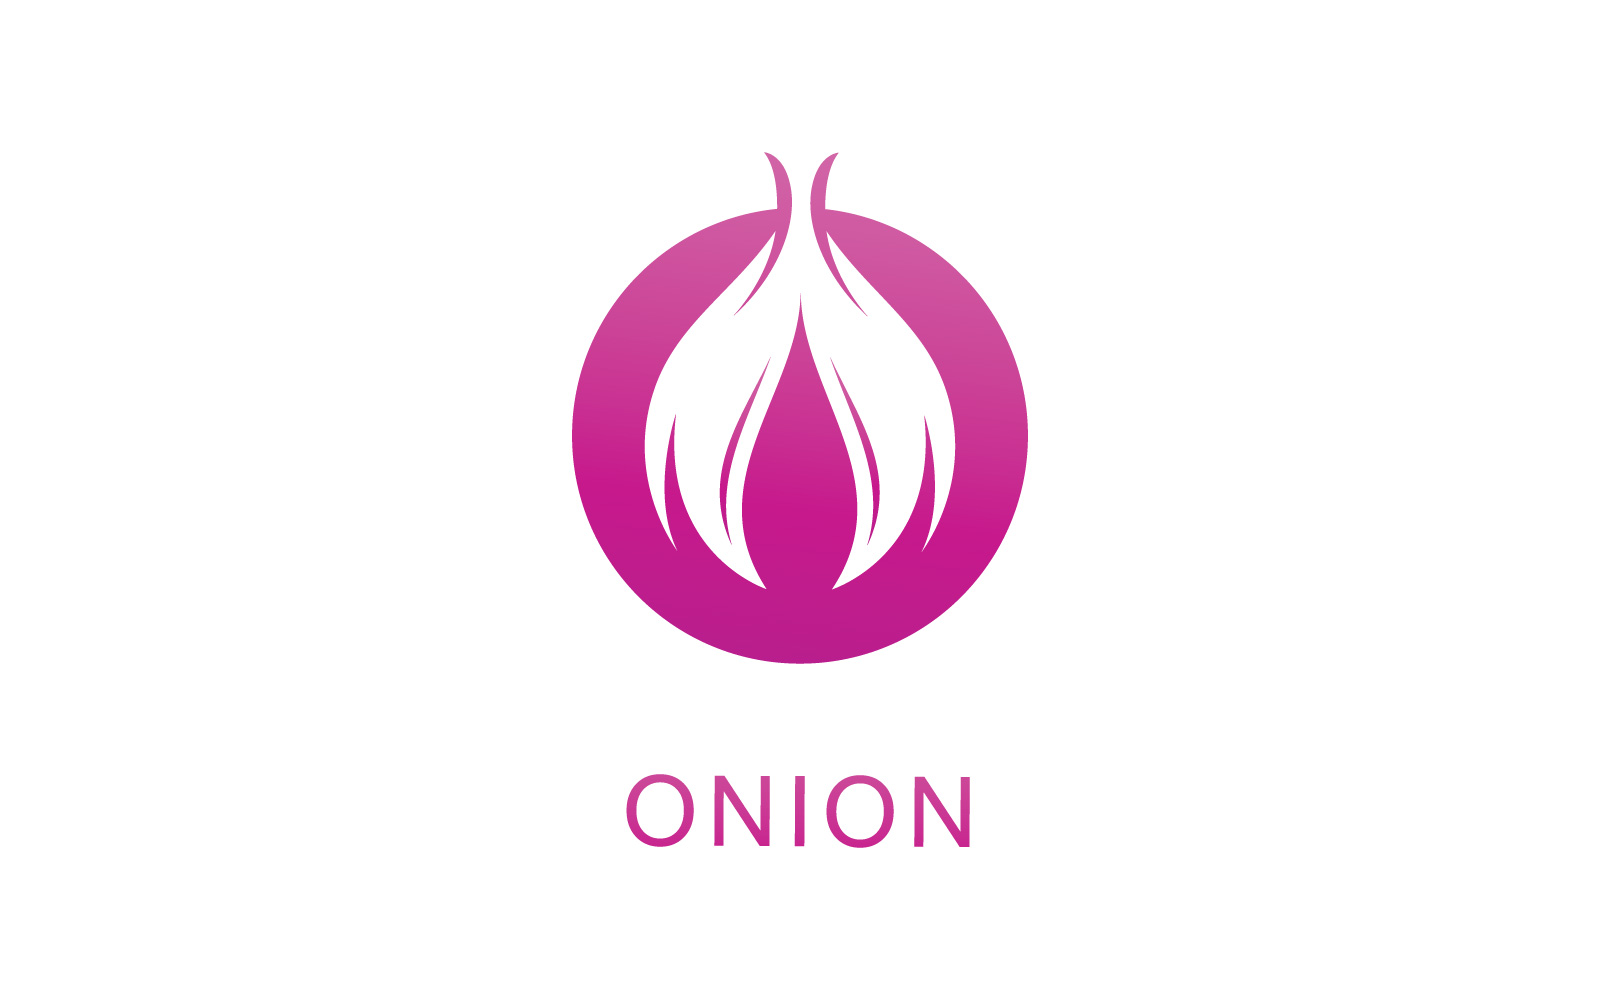 Onion Vector Template. Red Onion Logo Design V10